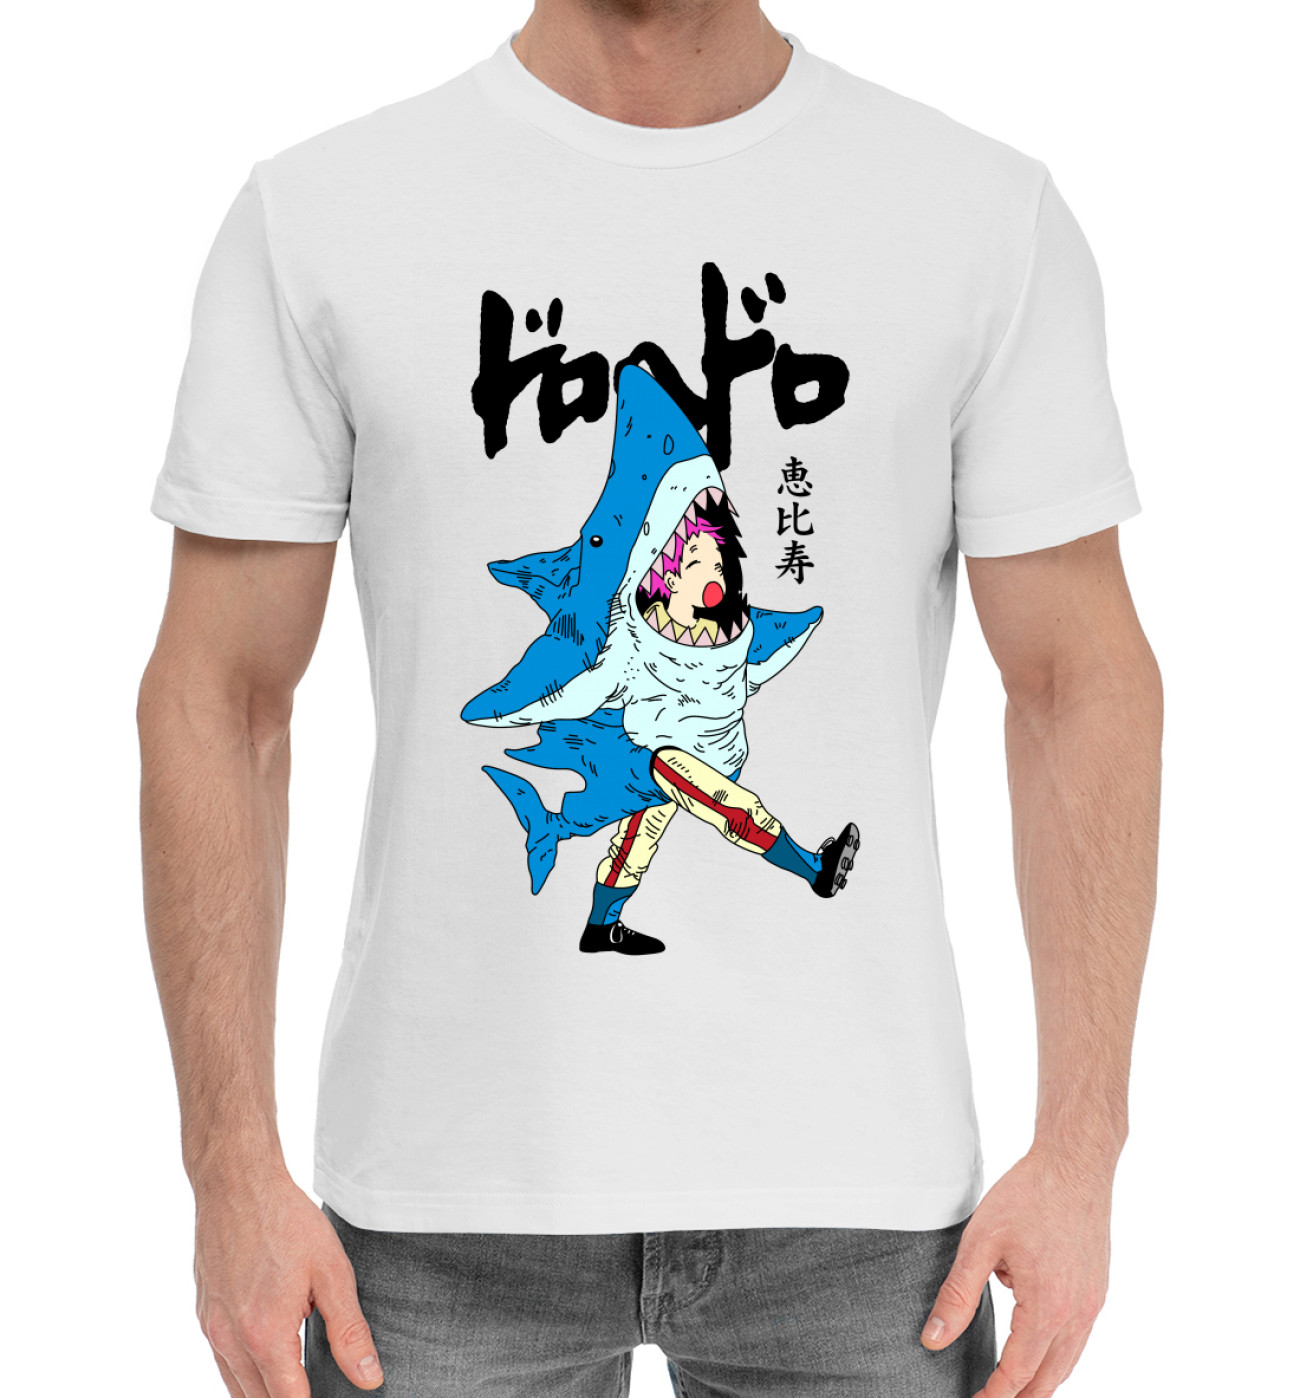 Мужская Хлопковая футболка Dorohedoro, артикул: ANR-311061-hfu-2